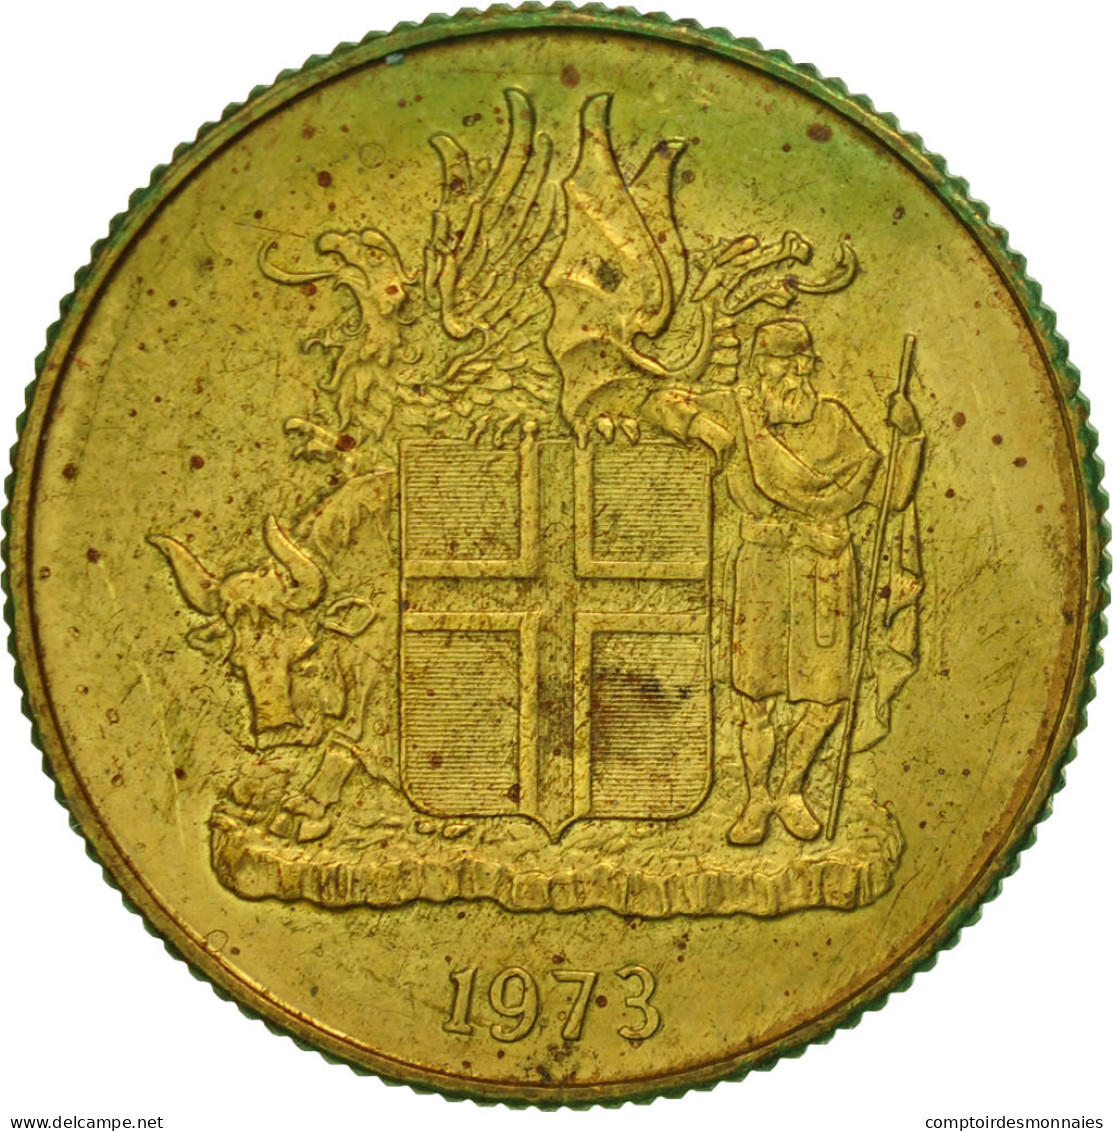 Monnaie, Iceland, Krona, 1973, TTB, Nickel-brass, KM:12a - Islande